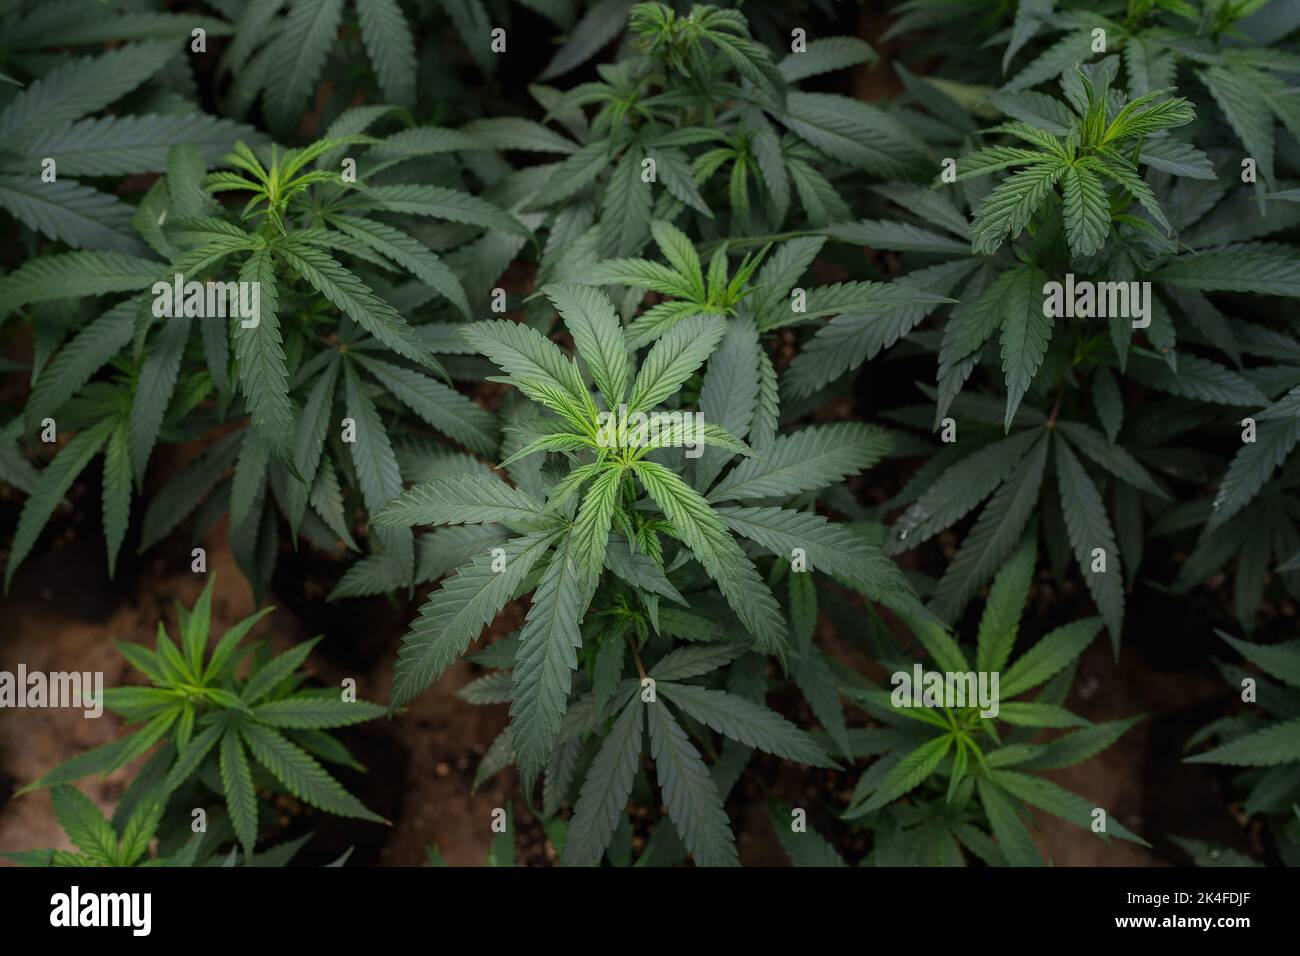 Cannabis or Marijuana or hemp leaf in a greenhouse. weed, herbal alternative medicine, cbd oil, pharmaceutical industry Concept Stock Photo